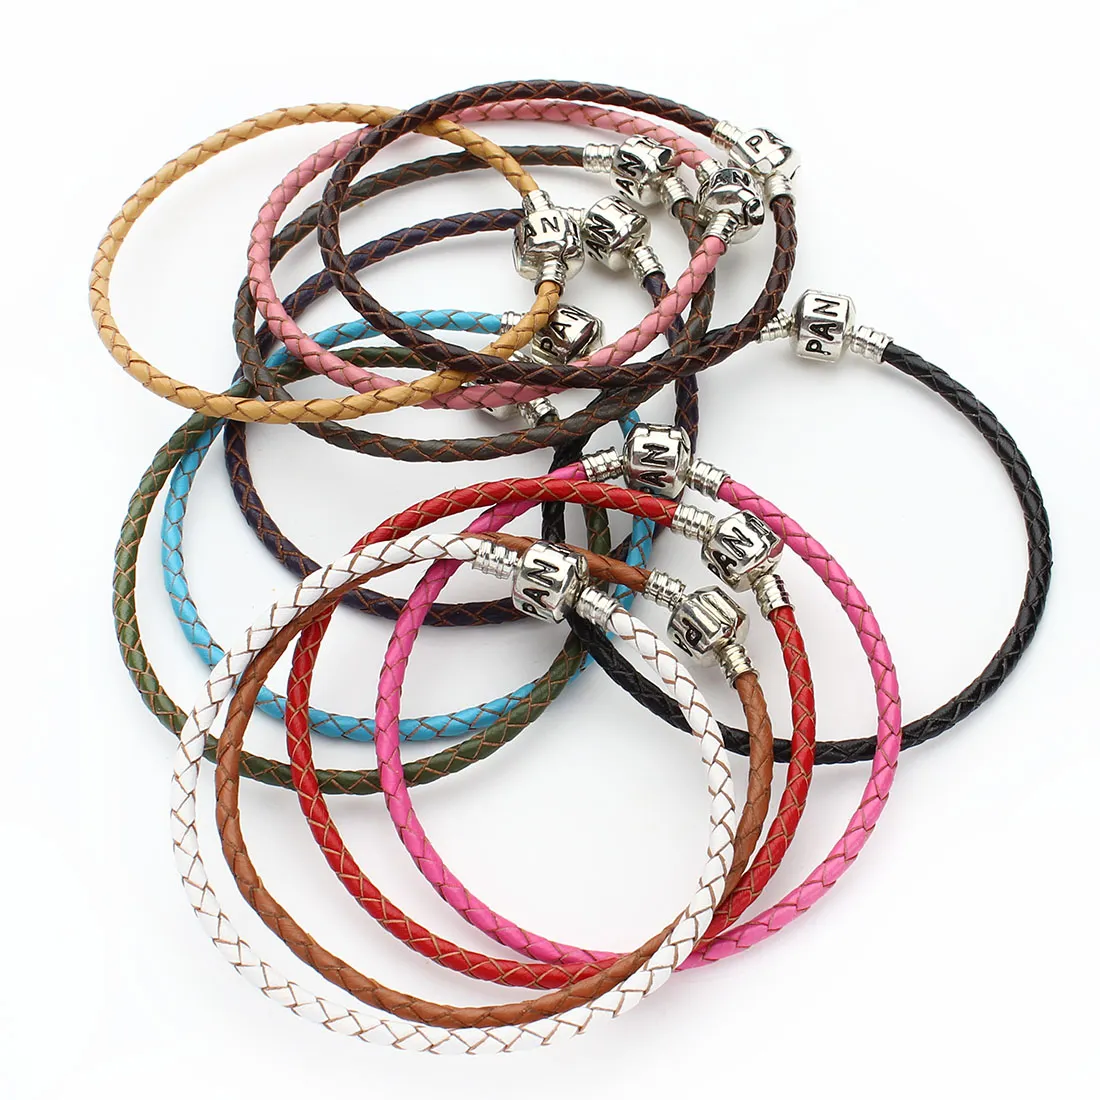 seialoy woven leather bracelets for women men plated buckle scalp accessories original brands charm bracelet bangle gifts